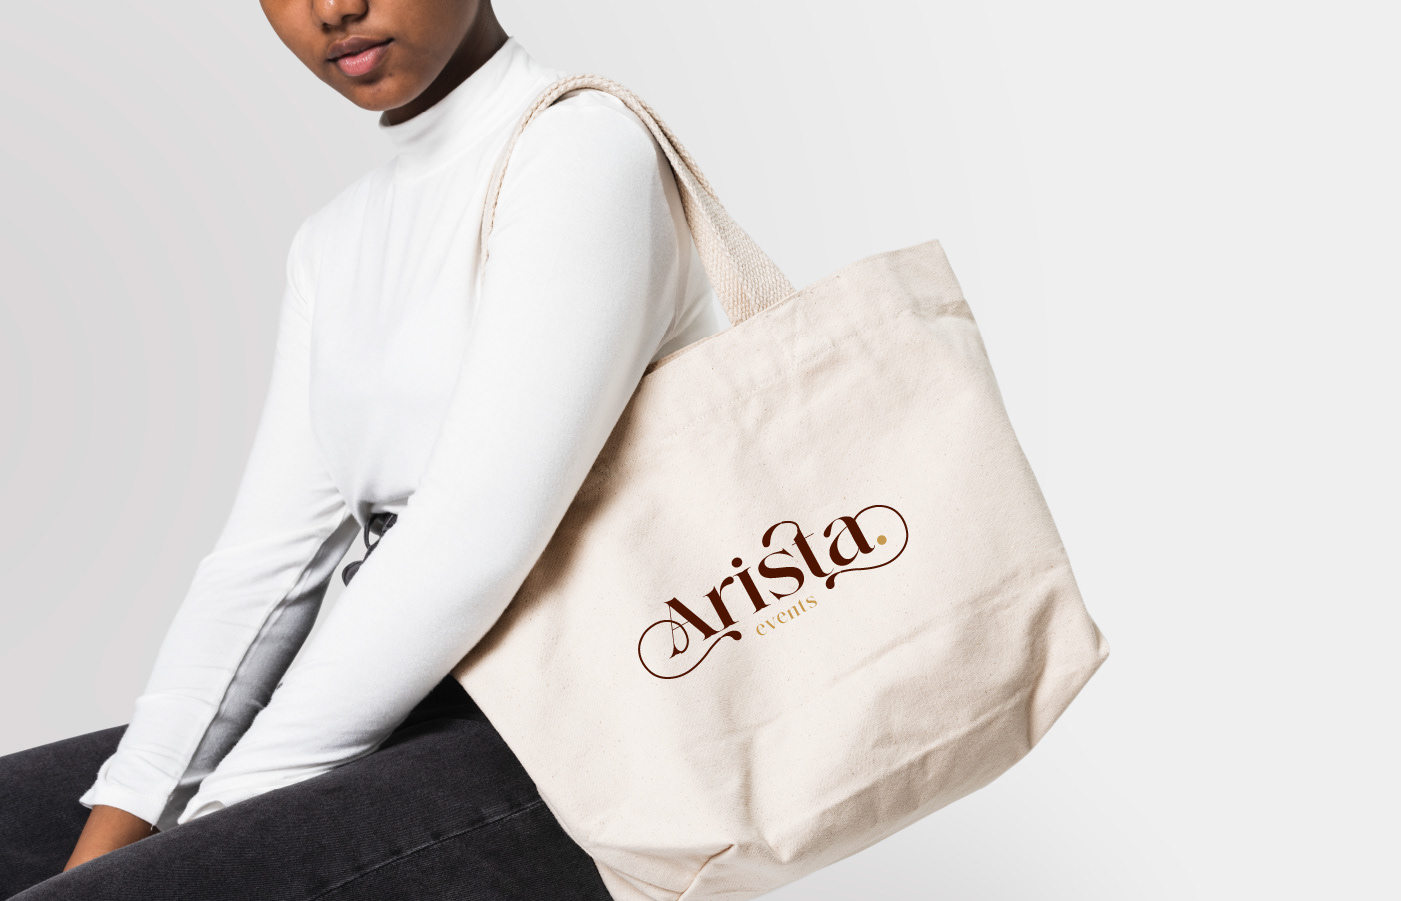 Arista Events Brand Identity Design. on Behance